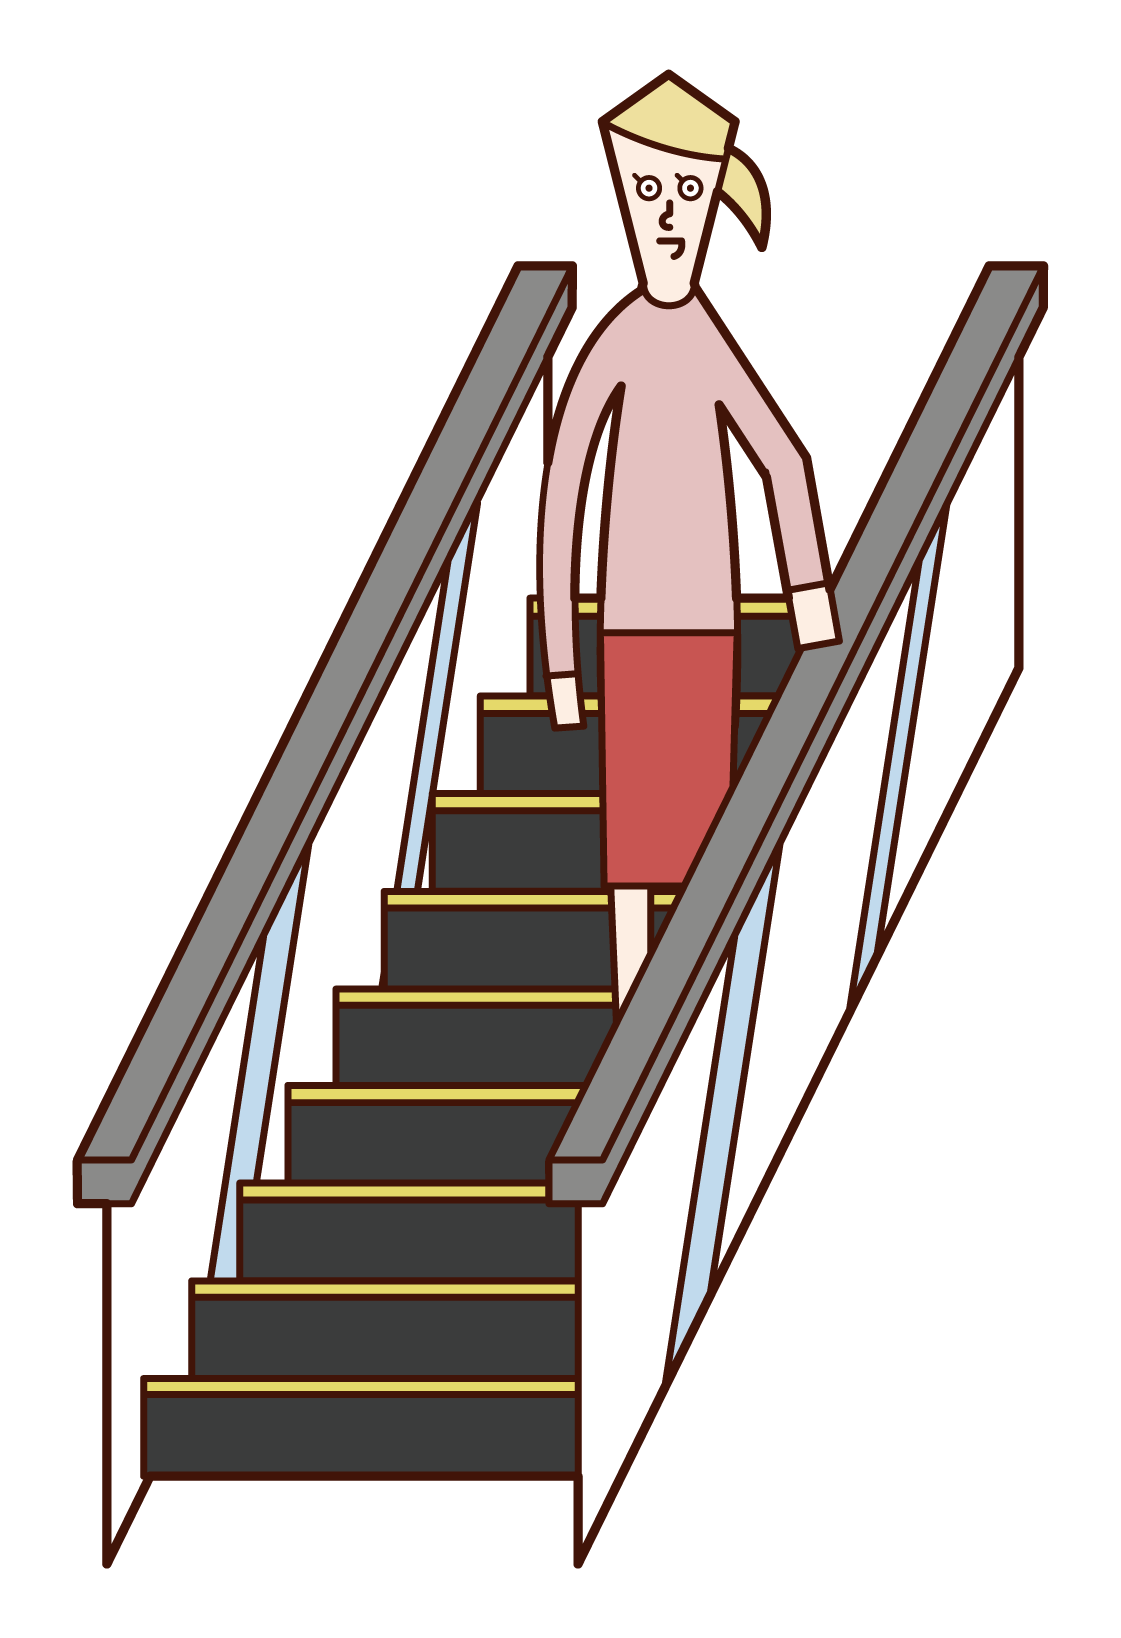 Illustration of a woman riding an escalator